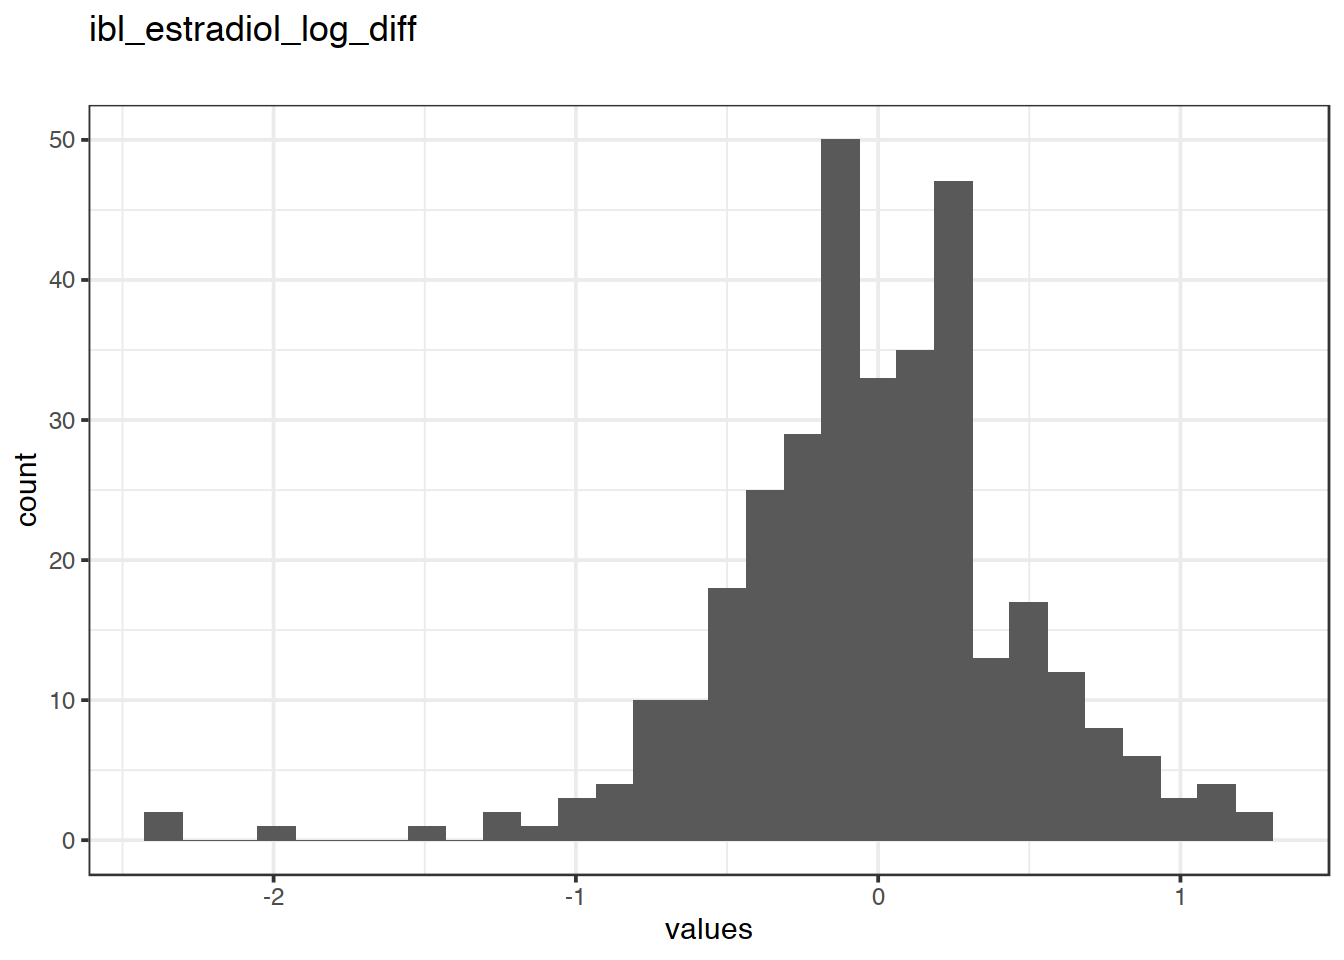 Distribution of values for ibl_estradiol_log_diff